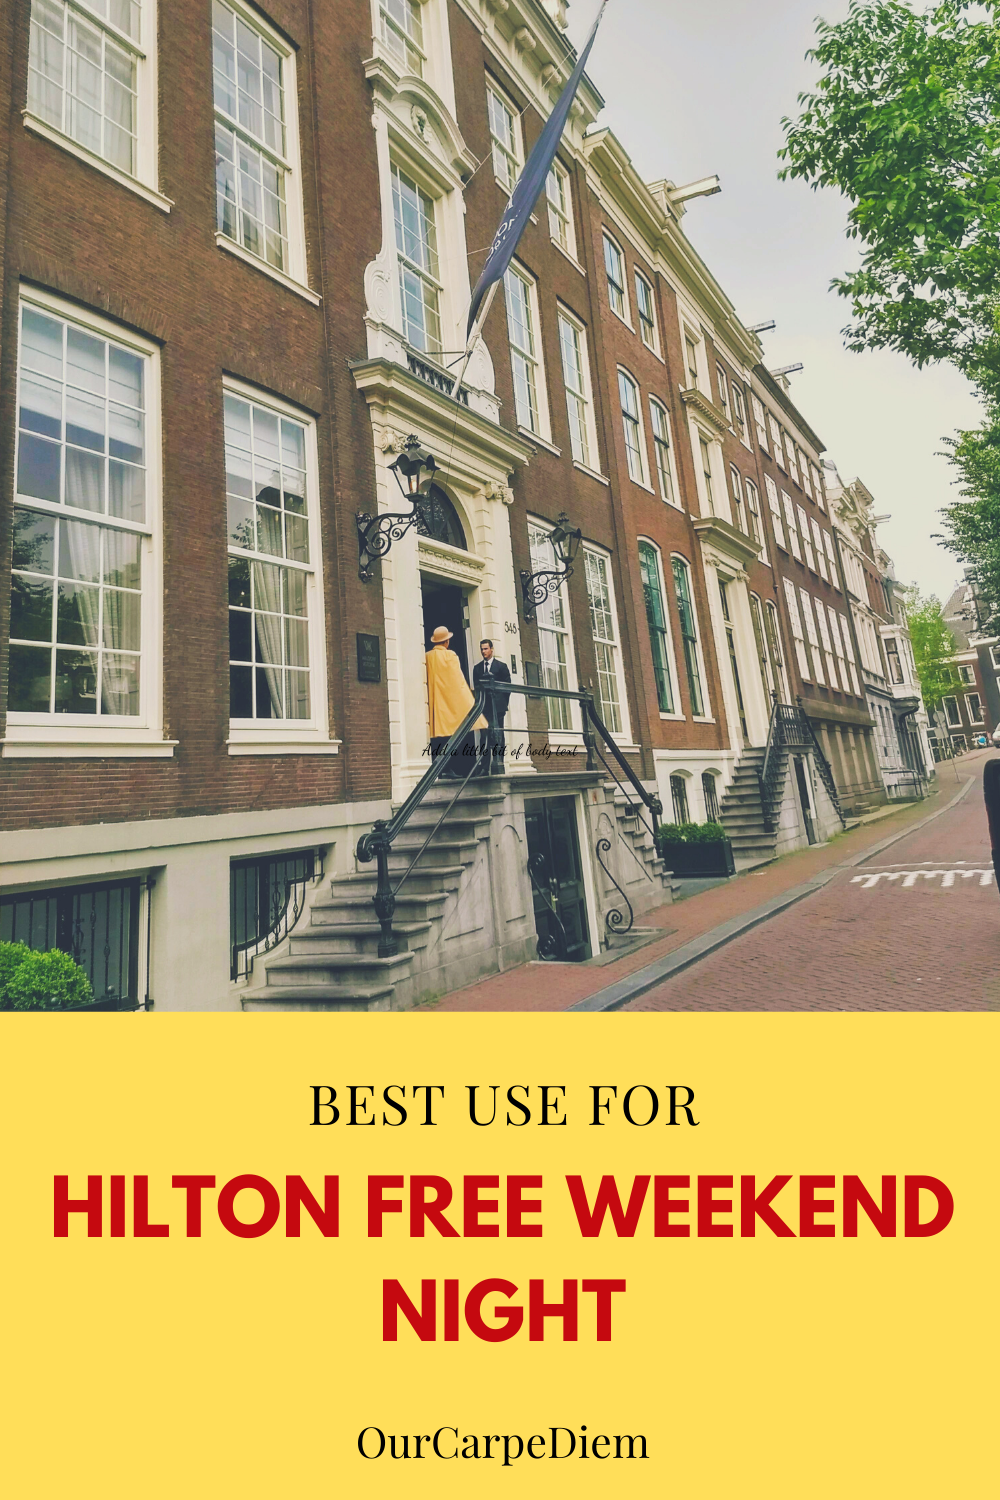 Best Use of Hilton Free Weekend Night Certificate 2022 - Our Carpe Diem